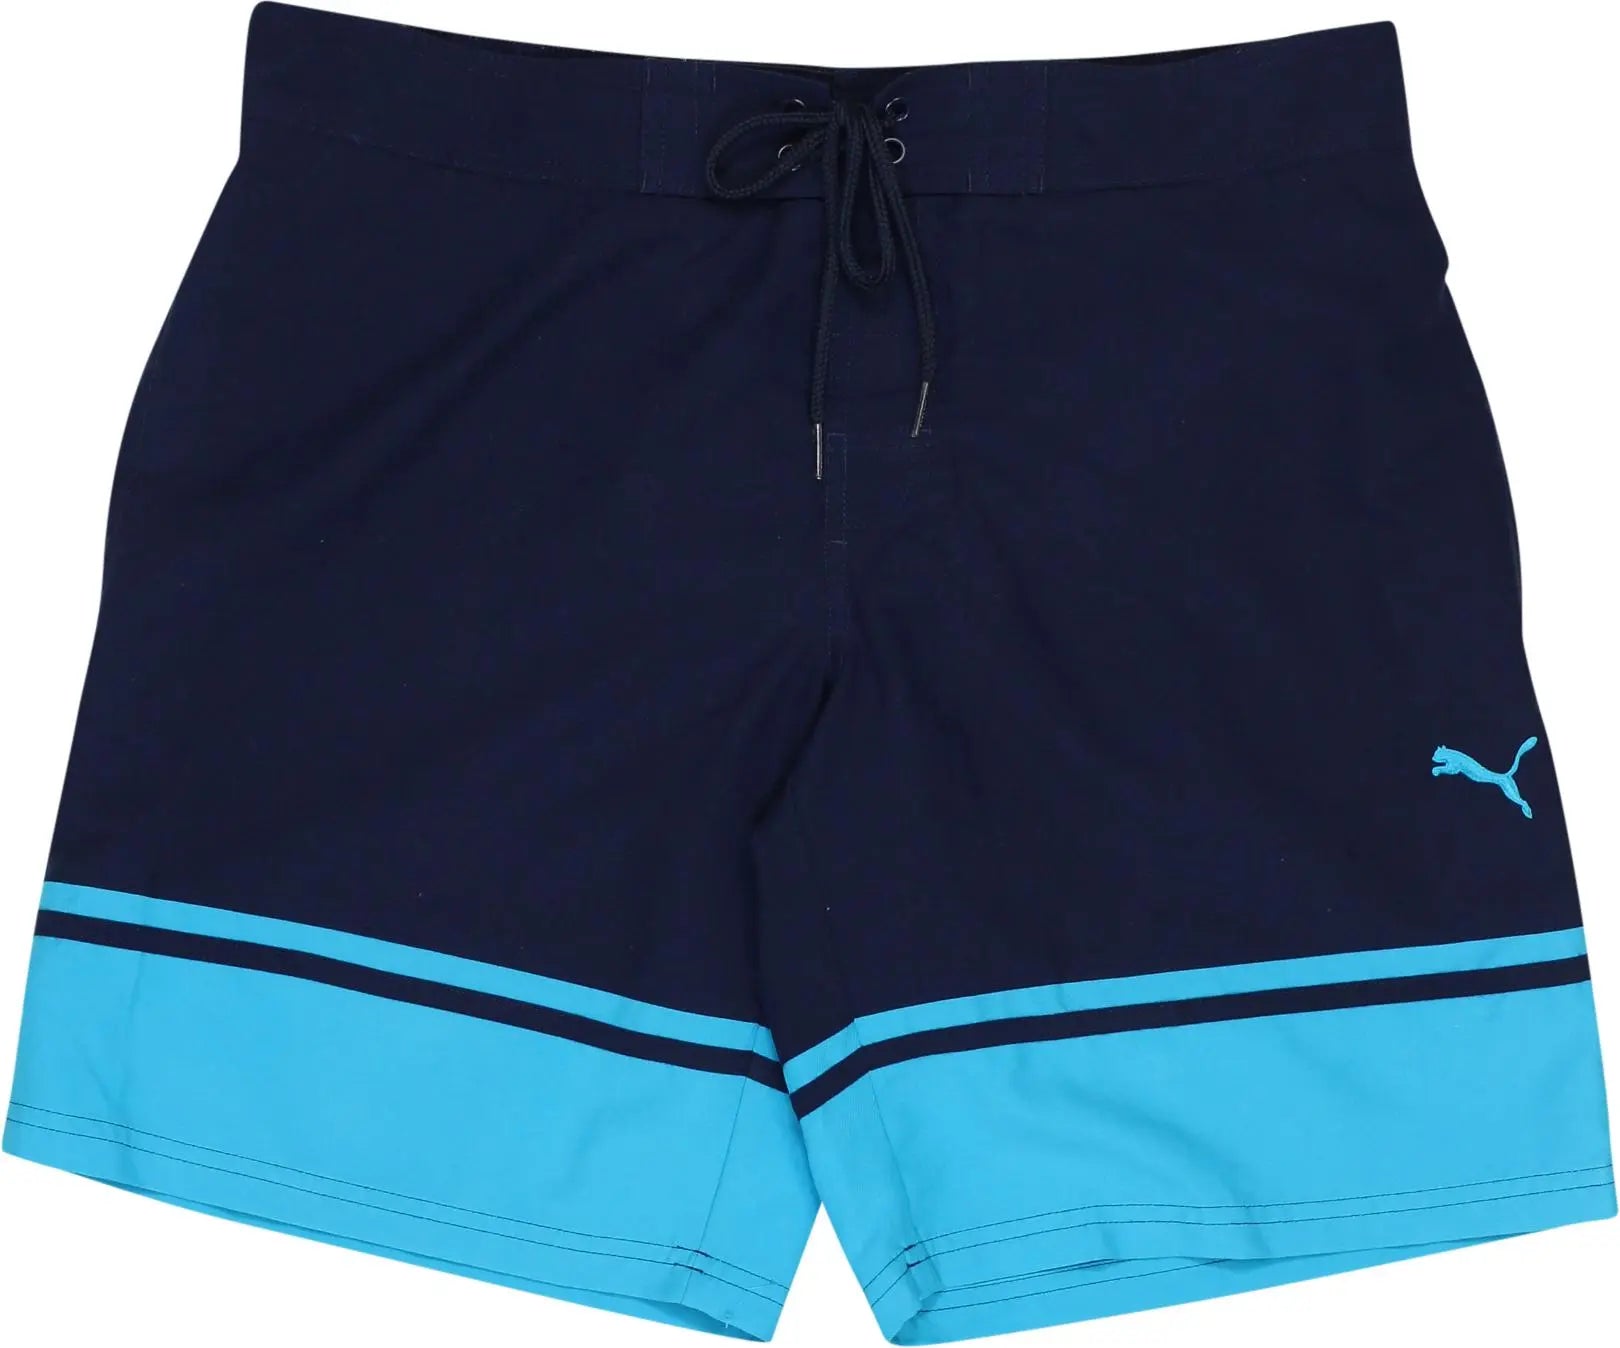 Puma - Swim Shorts- ThriftTale.com - Vintage and second handclothing